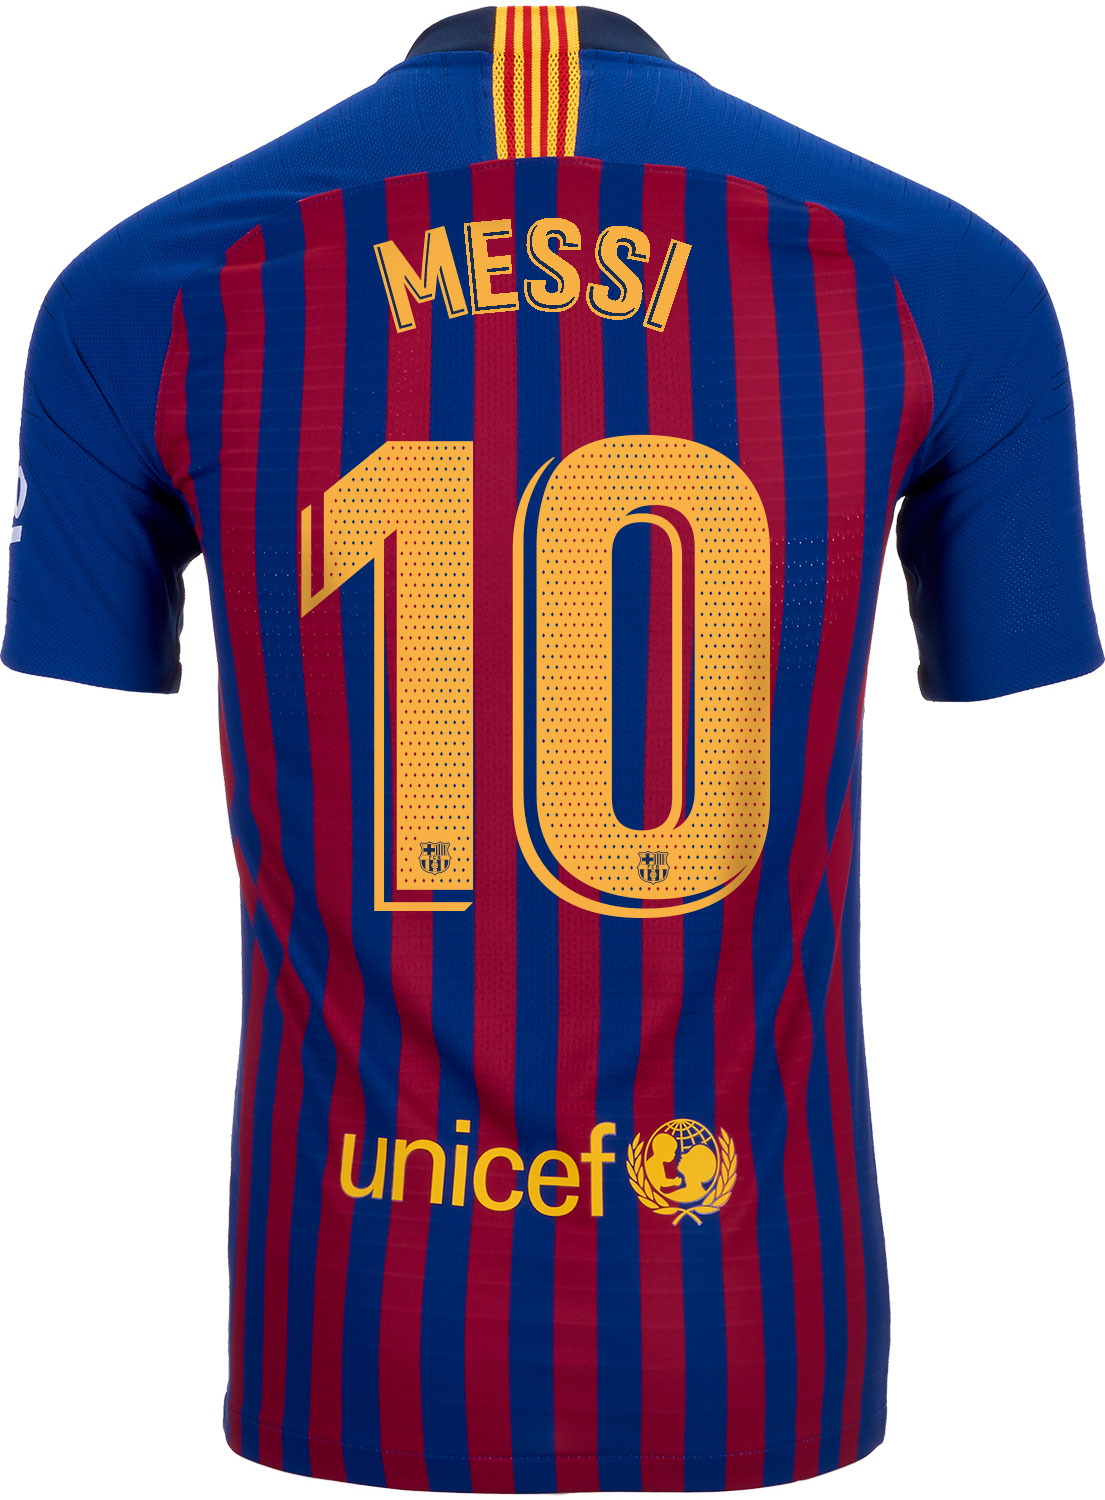 Oscurecer transmisión Inevitable 2018/19 Nike Lionel Messi Barcelona Home Match Jersey - SoccerPro